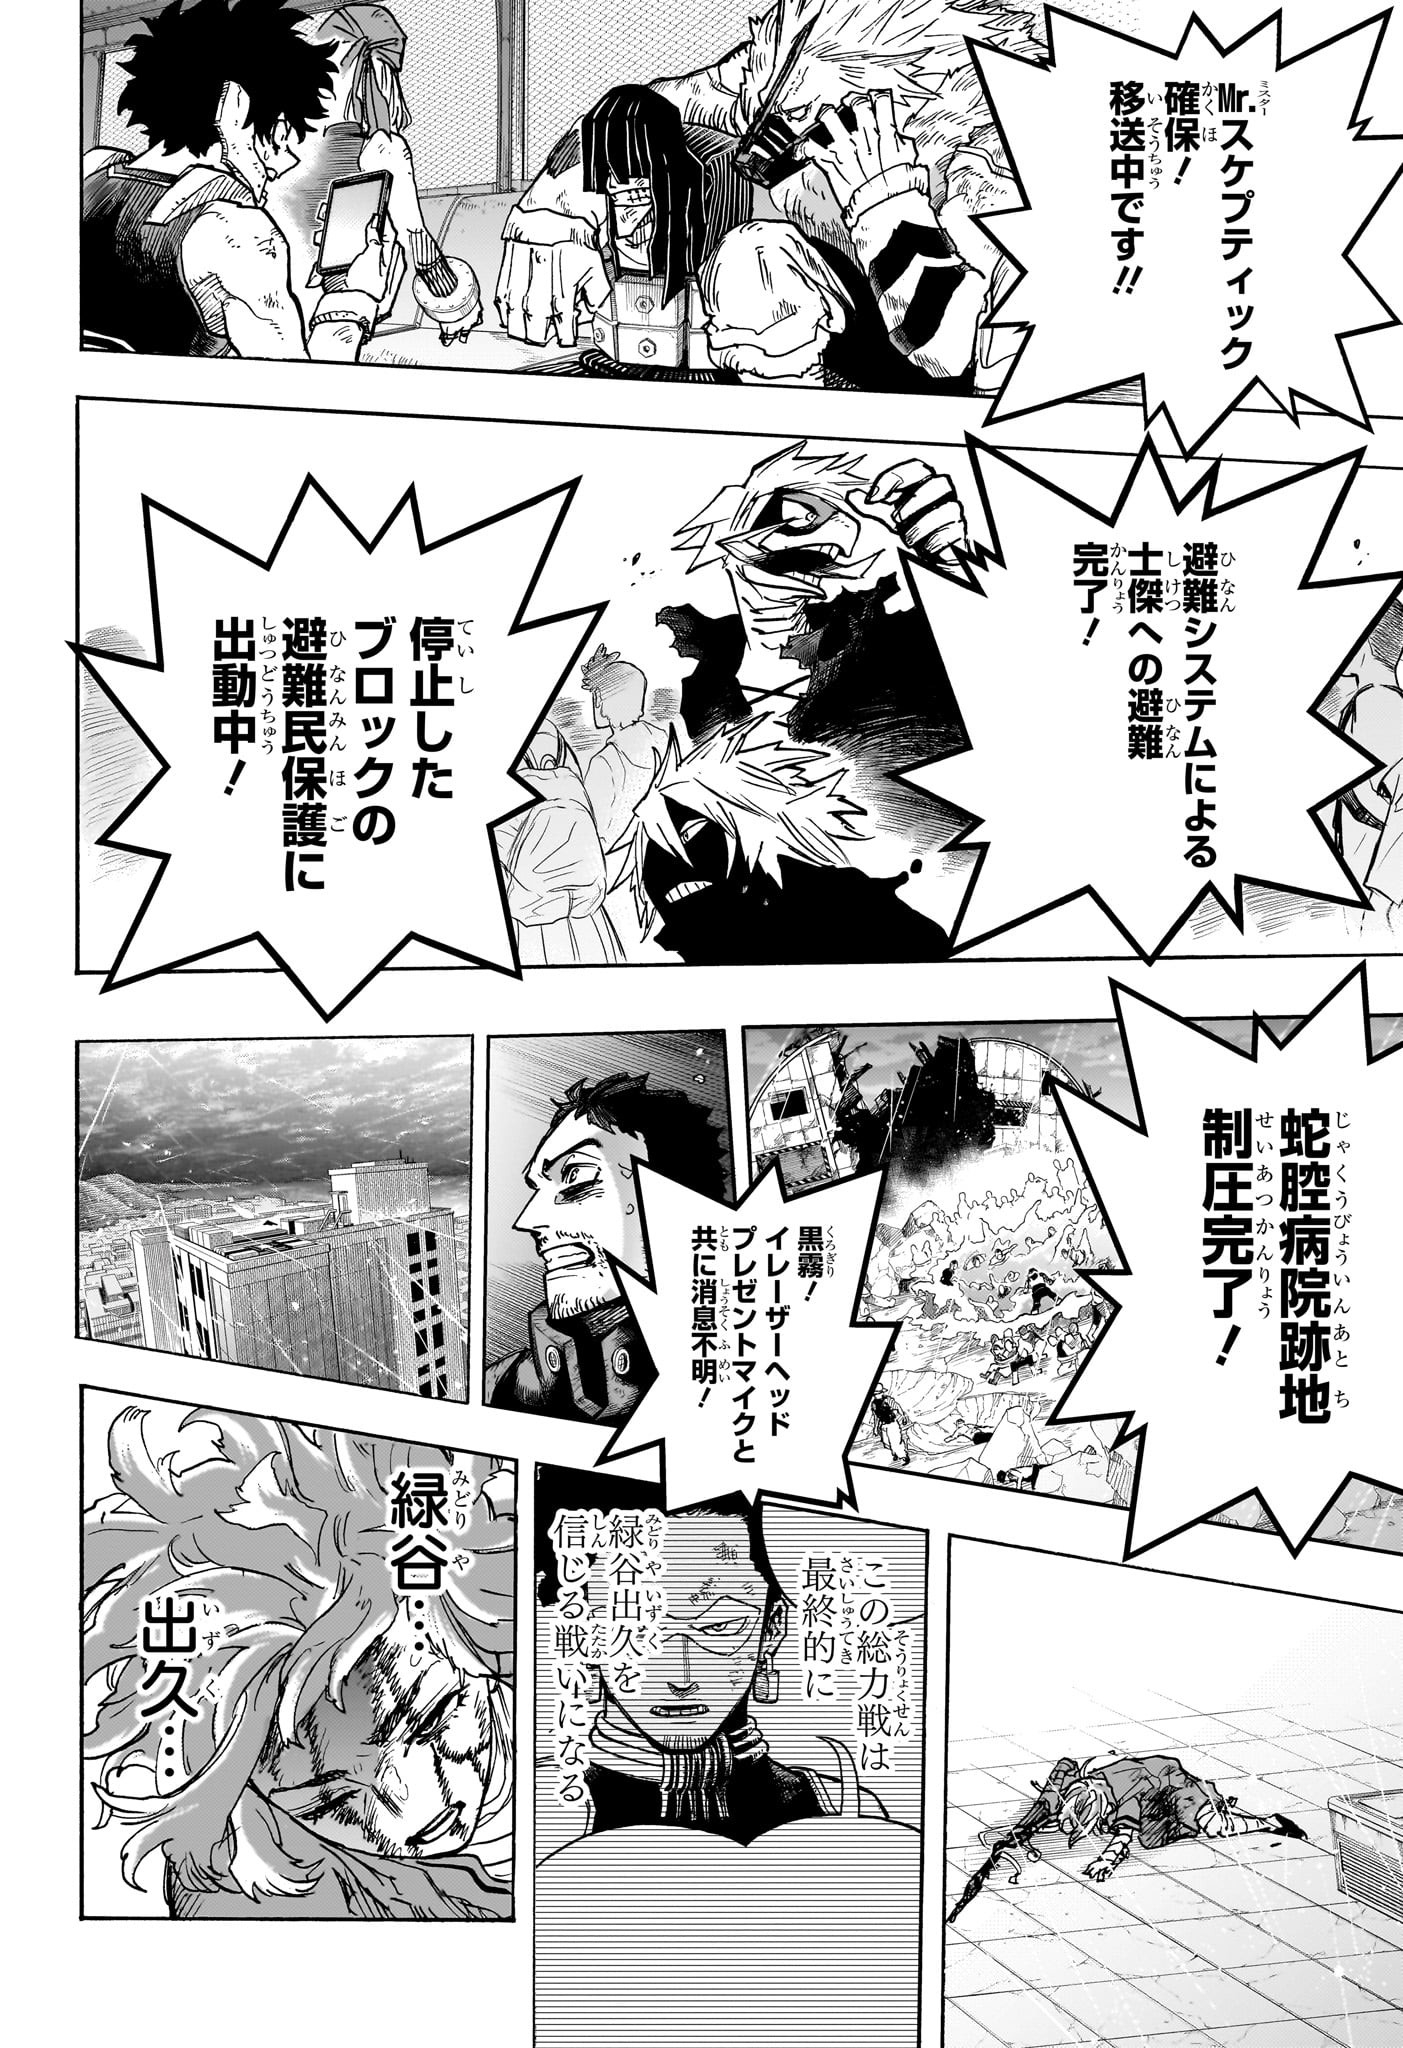 Boku no Hero Academia - Chapter 406 - Page 2